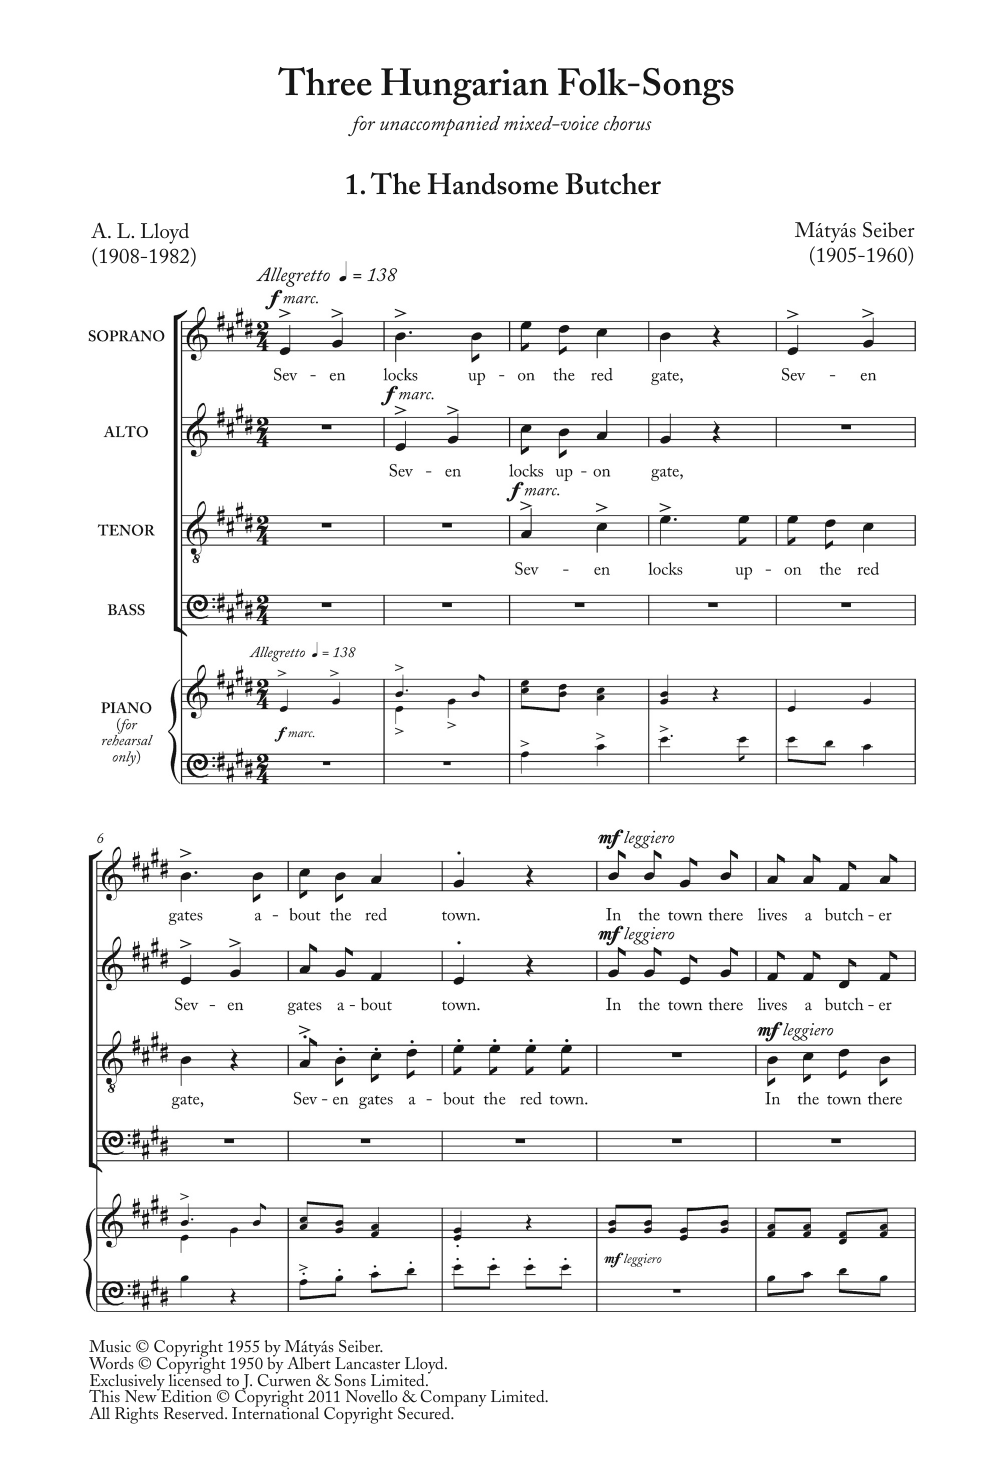 Matyas Seiber Three Hungarian Folk Songs Sheet Music Notes & Chords for Choir - Download or Print PDF